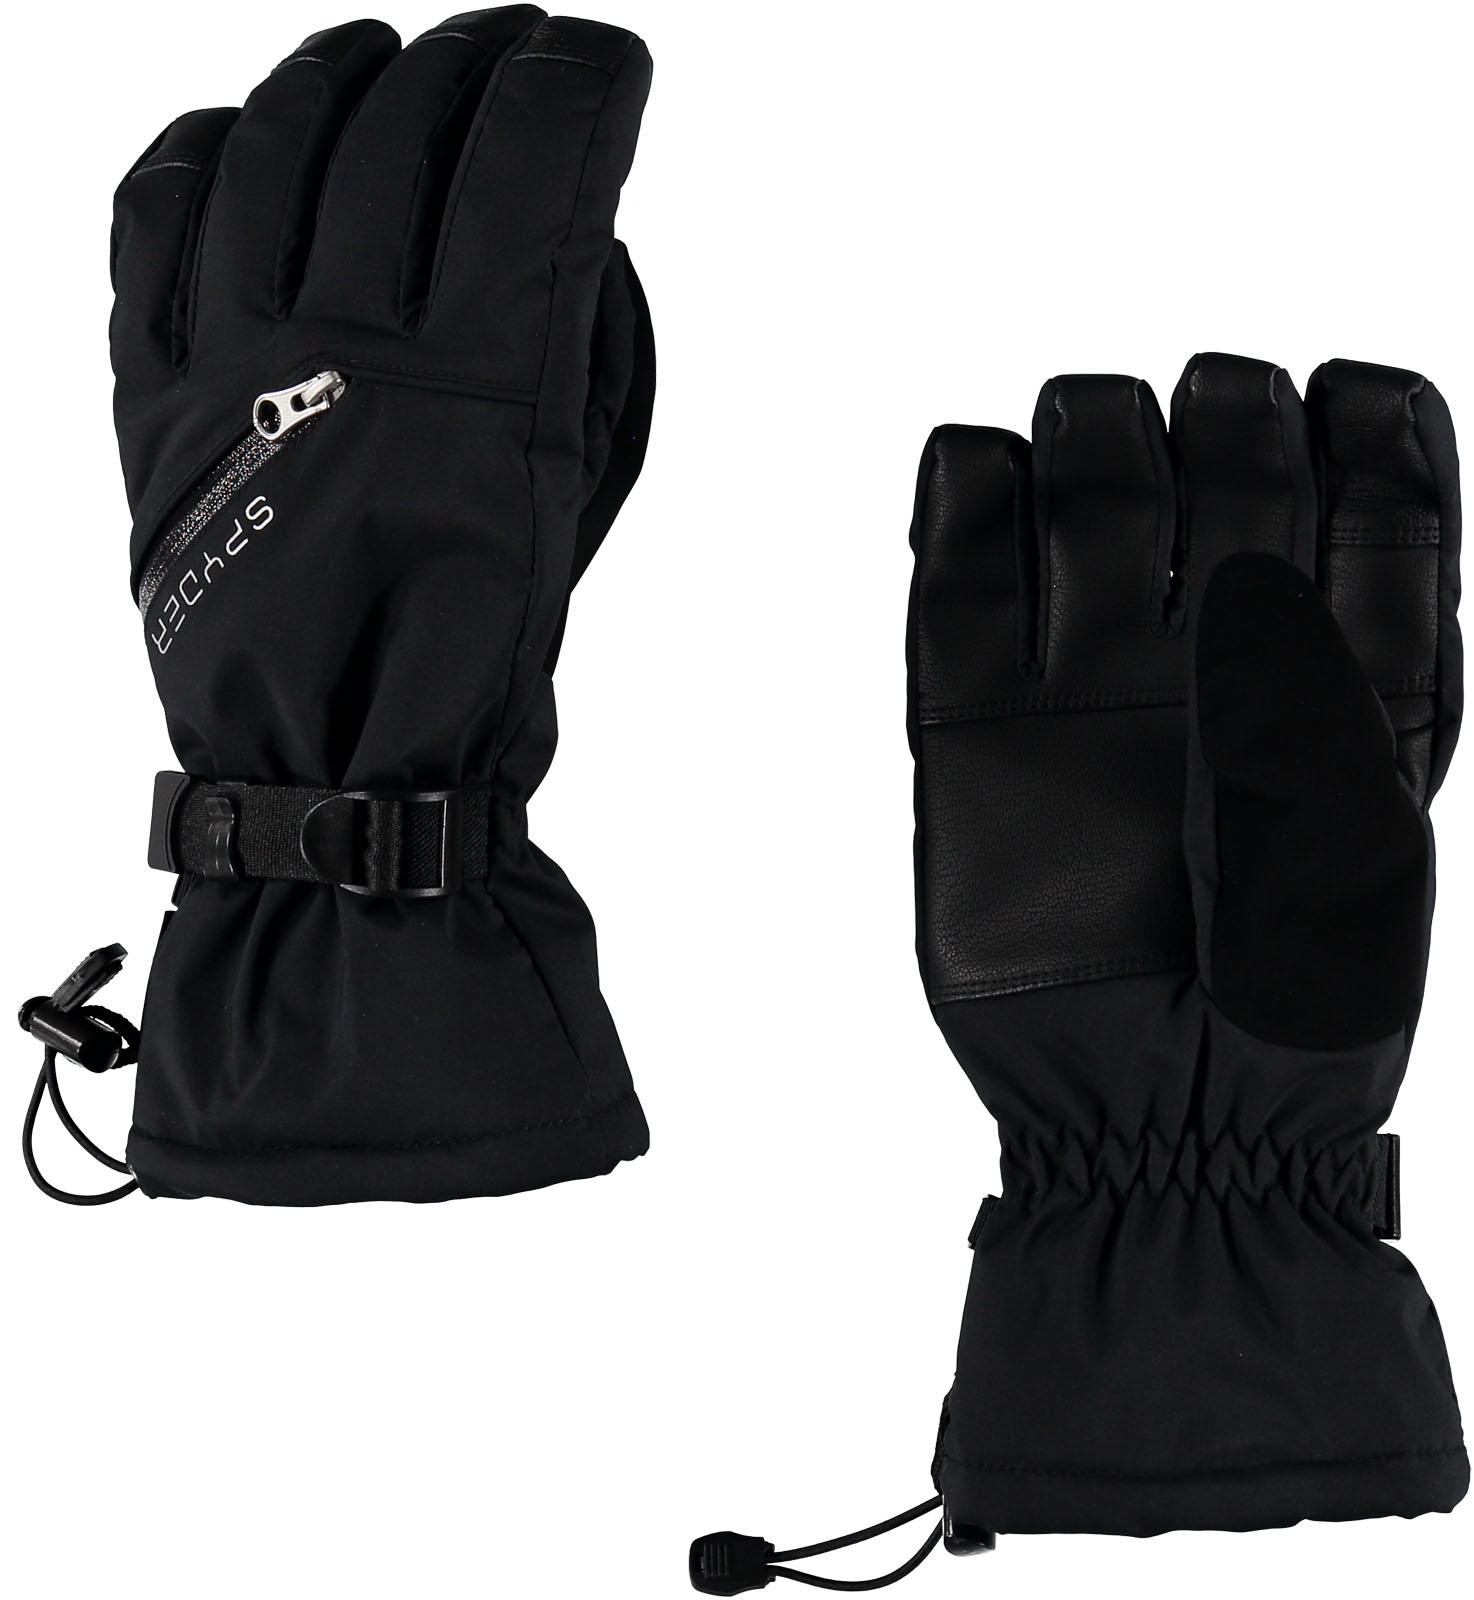 Spyder Women's Gore-Tex Conduct Ski Glove - Black